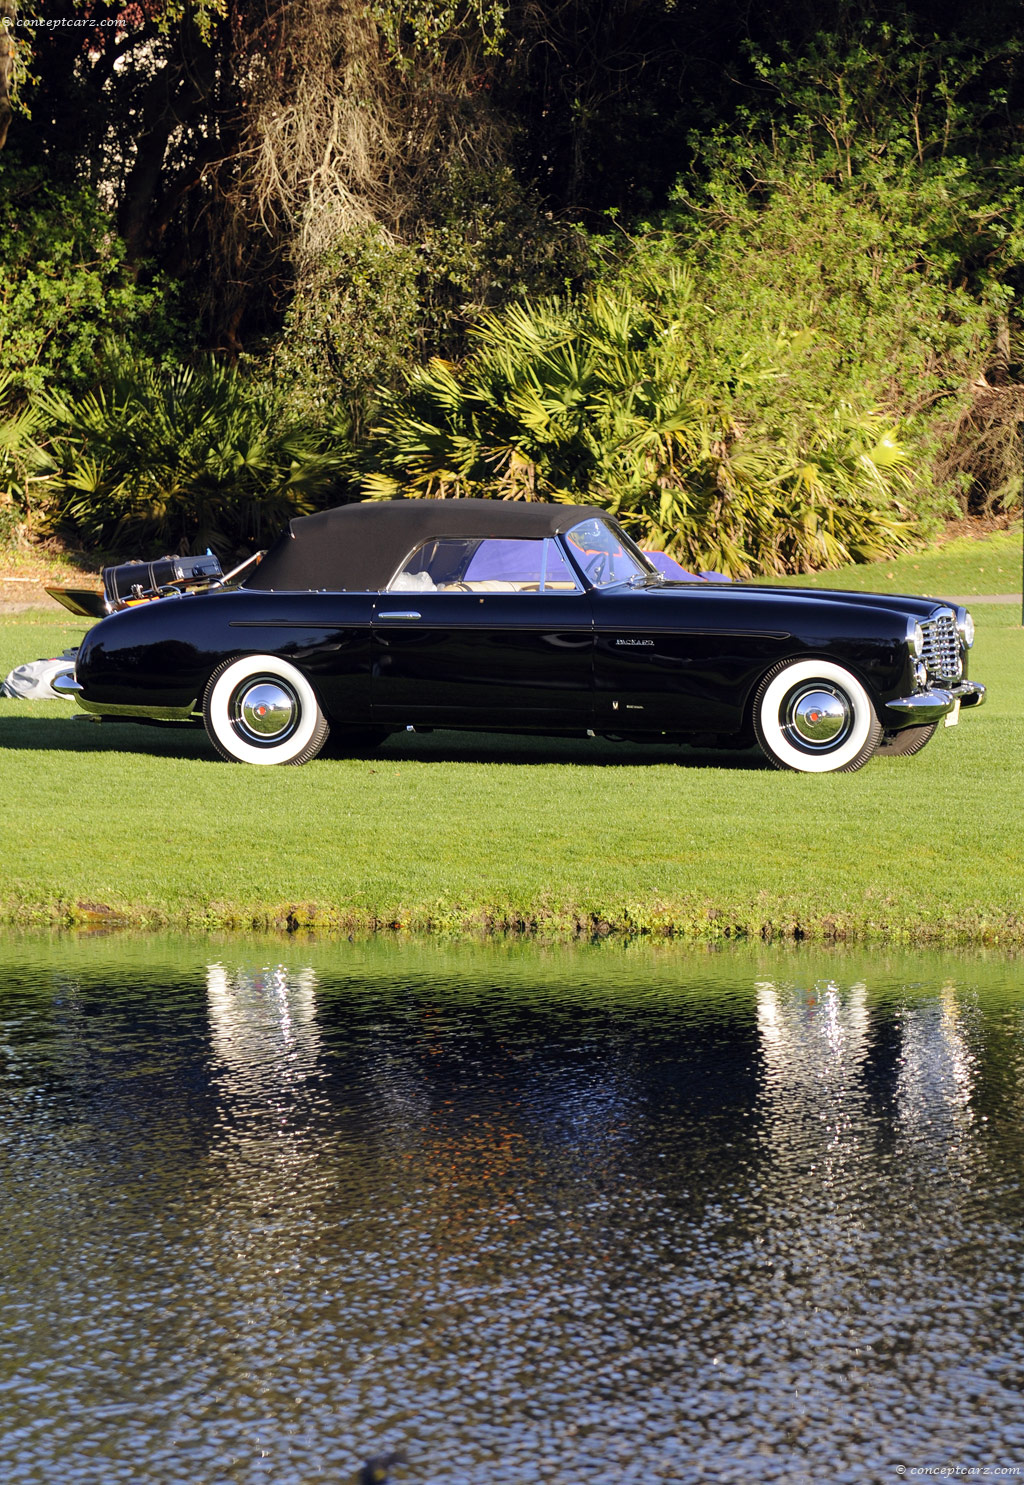 1948 Packard Vignale Victoria